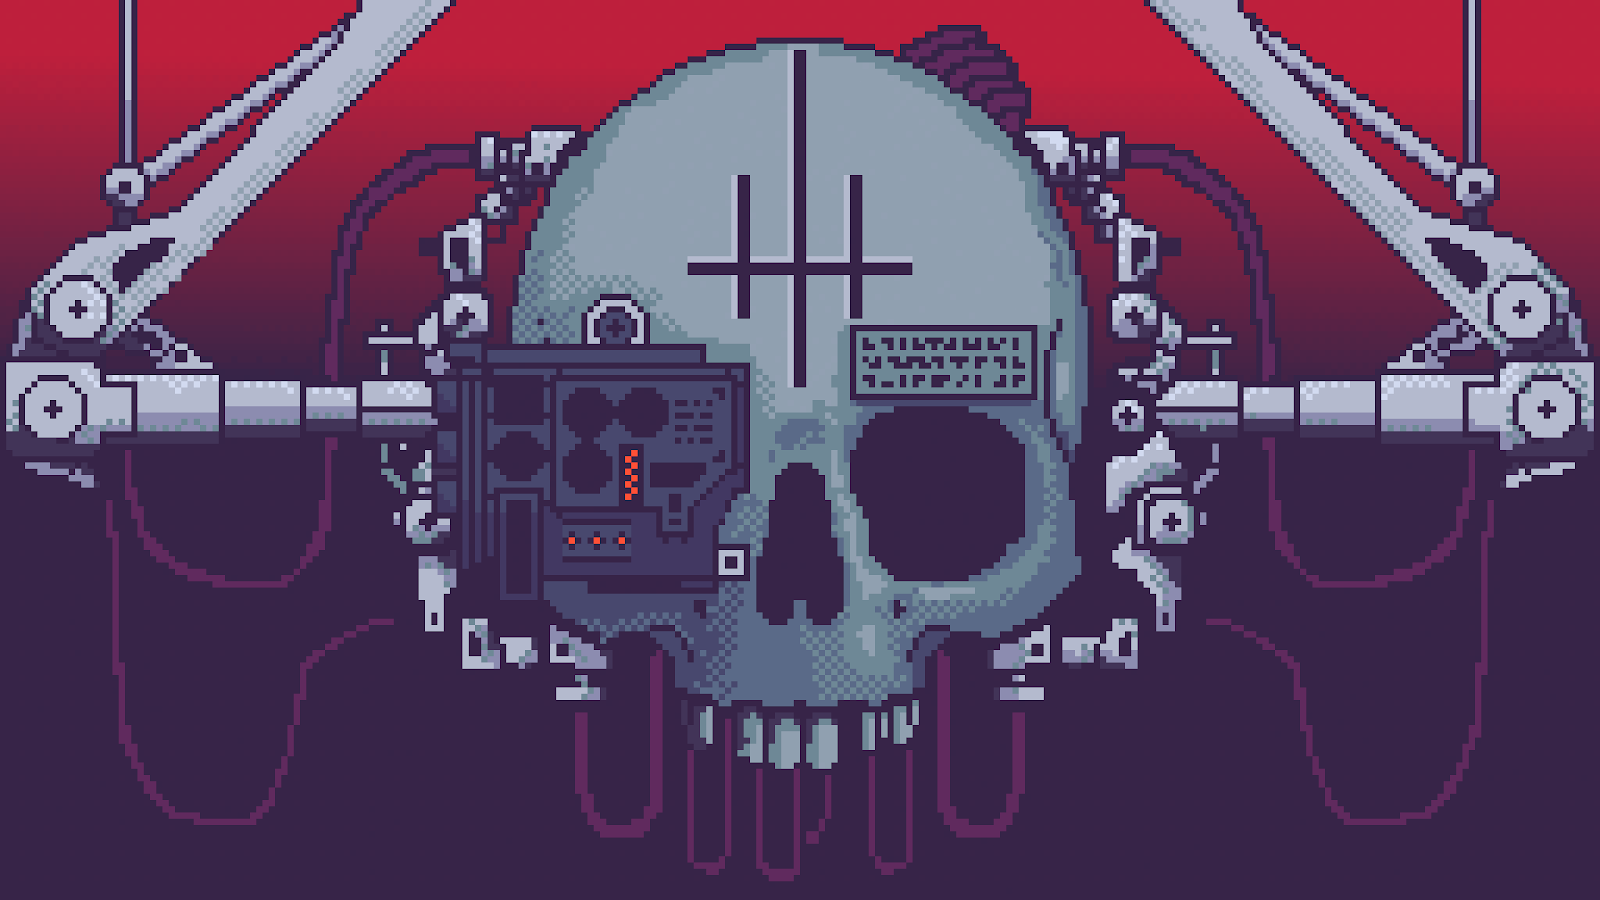 Skull Pixel Art